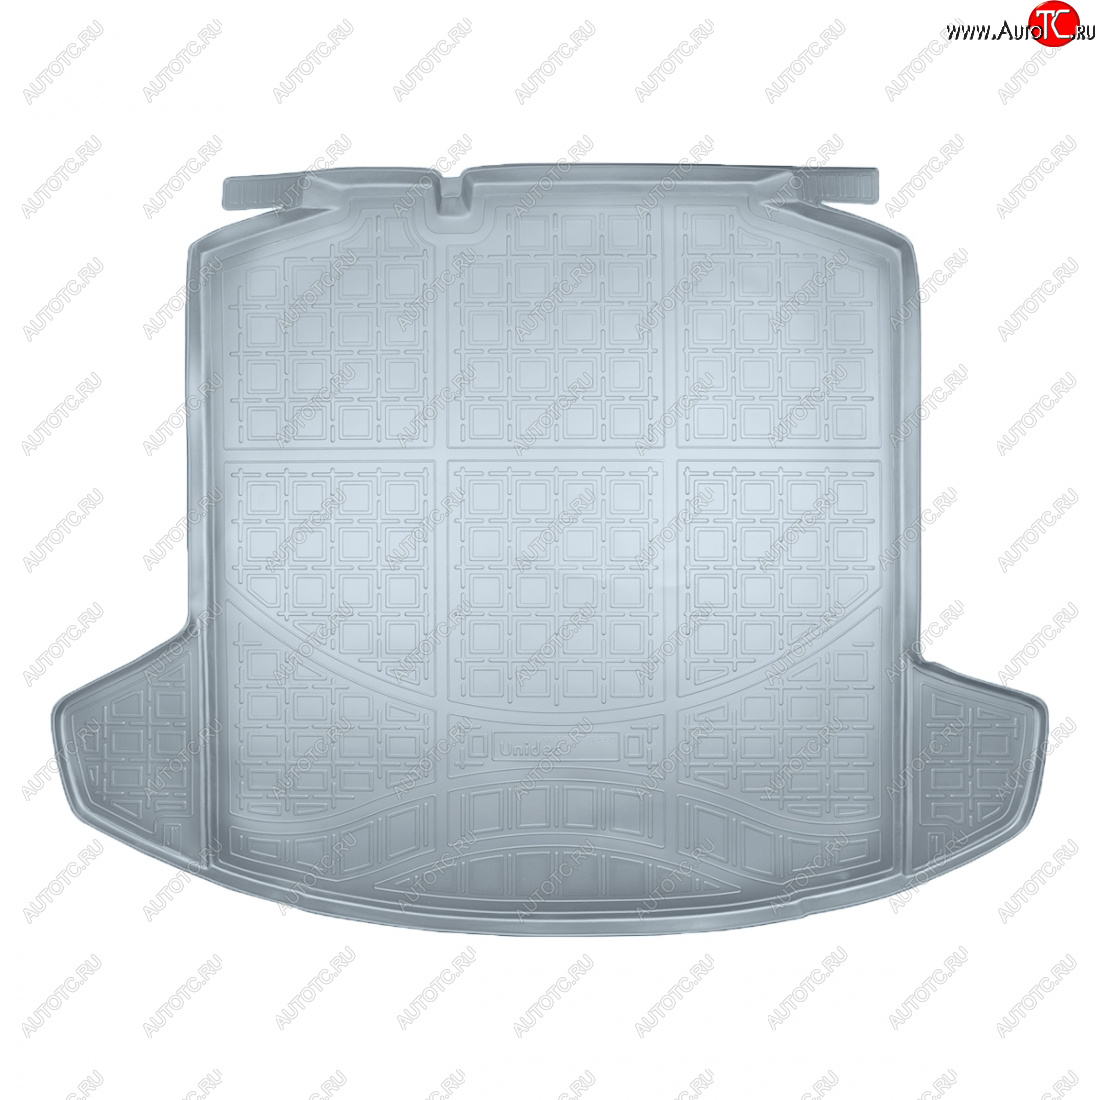 1 979 р. Коврик багажника Norplast Unidec  Skoda Rapid  MK2 (2019-2024) (серый)